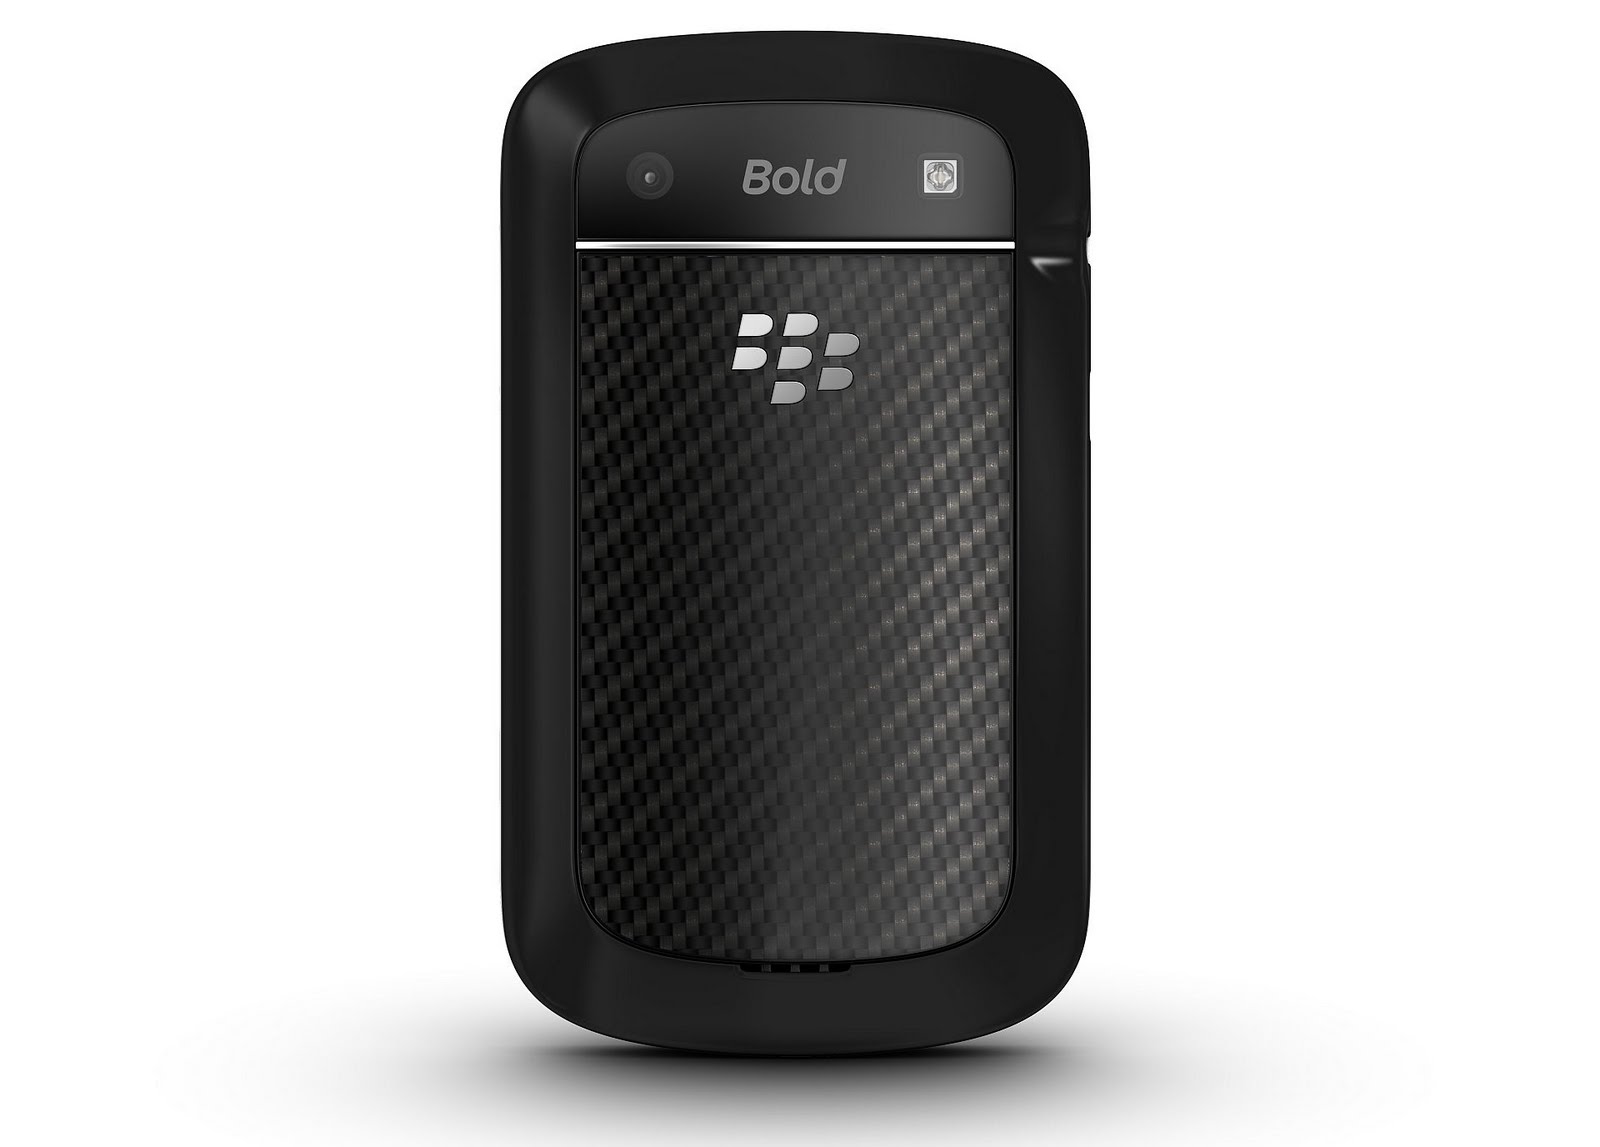 Enterprise activation blackberry bold 9900